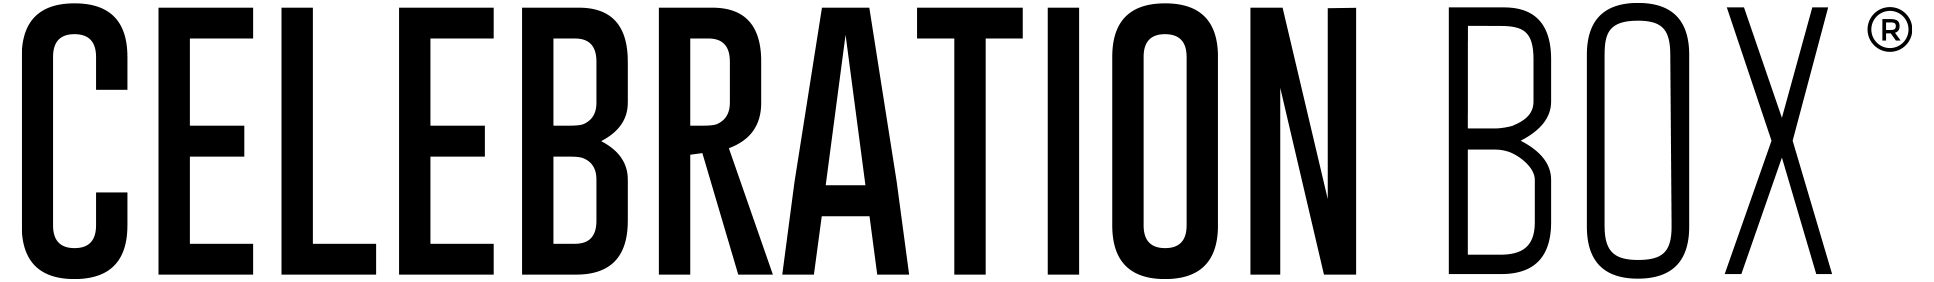 celebration-box-nz logo